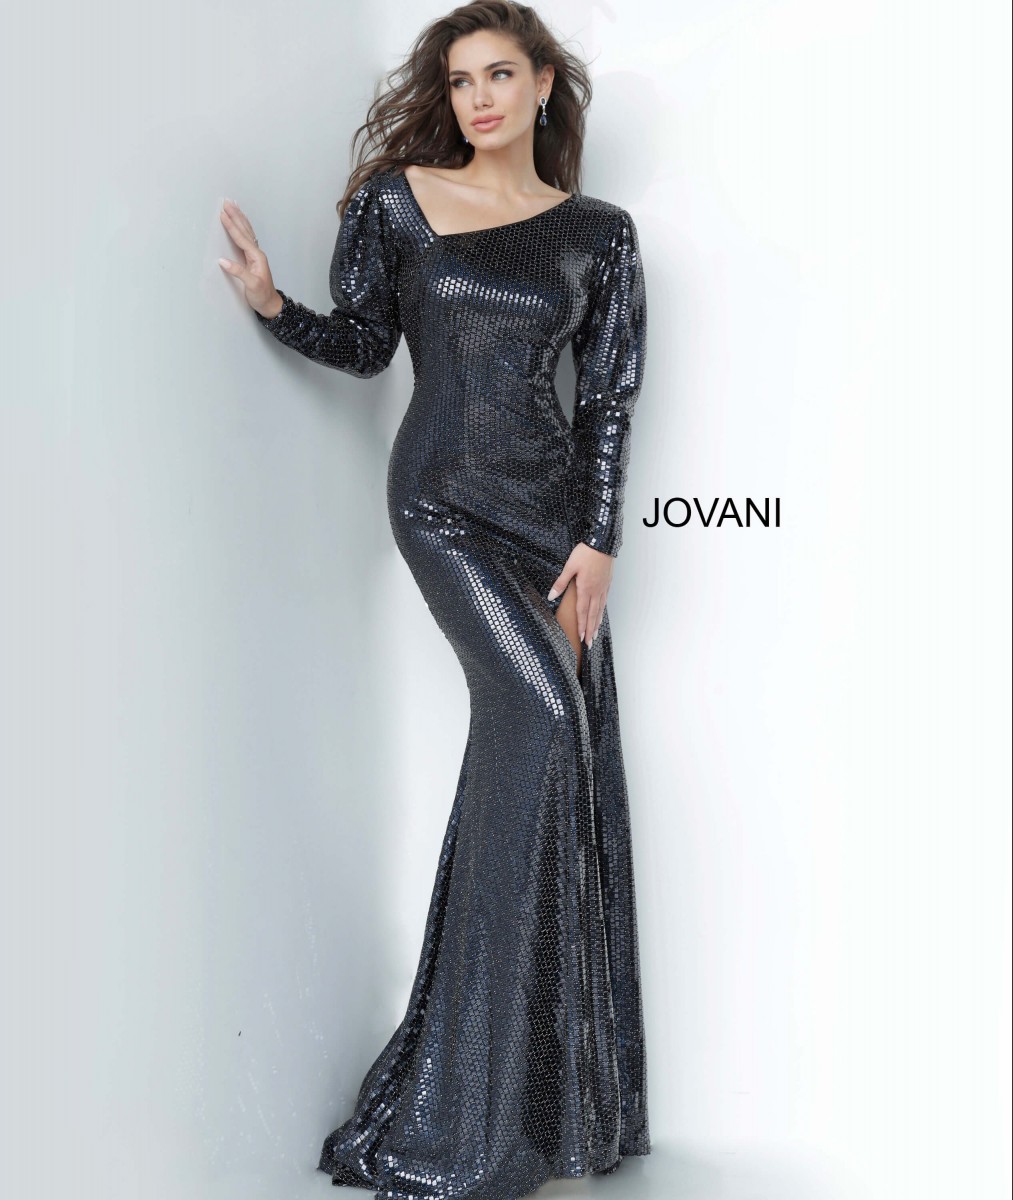 Jovani Black Tiled Long Sleeve with Asymmetrical Neckline style - 1712A